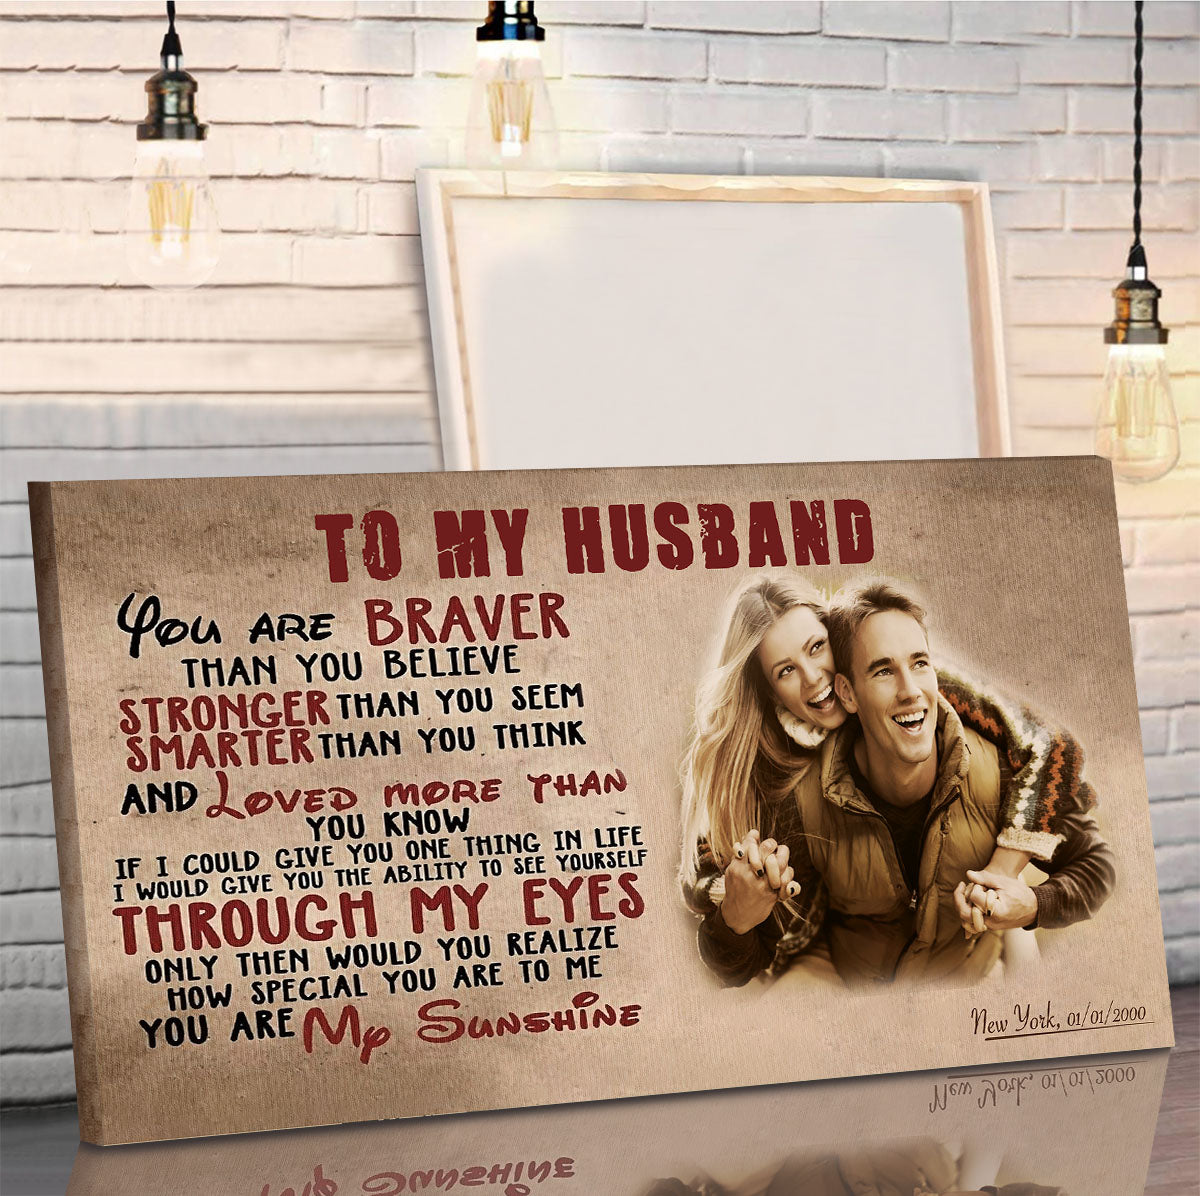 UP006 - To My Husband - Braver - Stronger - Smarter - Loved - Carl & Ellie - Up (2009 film) - Horizontal Poster - Horizontal Canvas - Carl & Ellie Poster